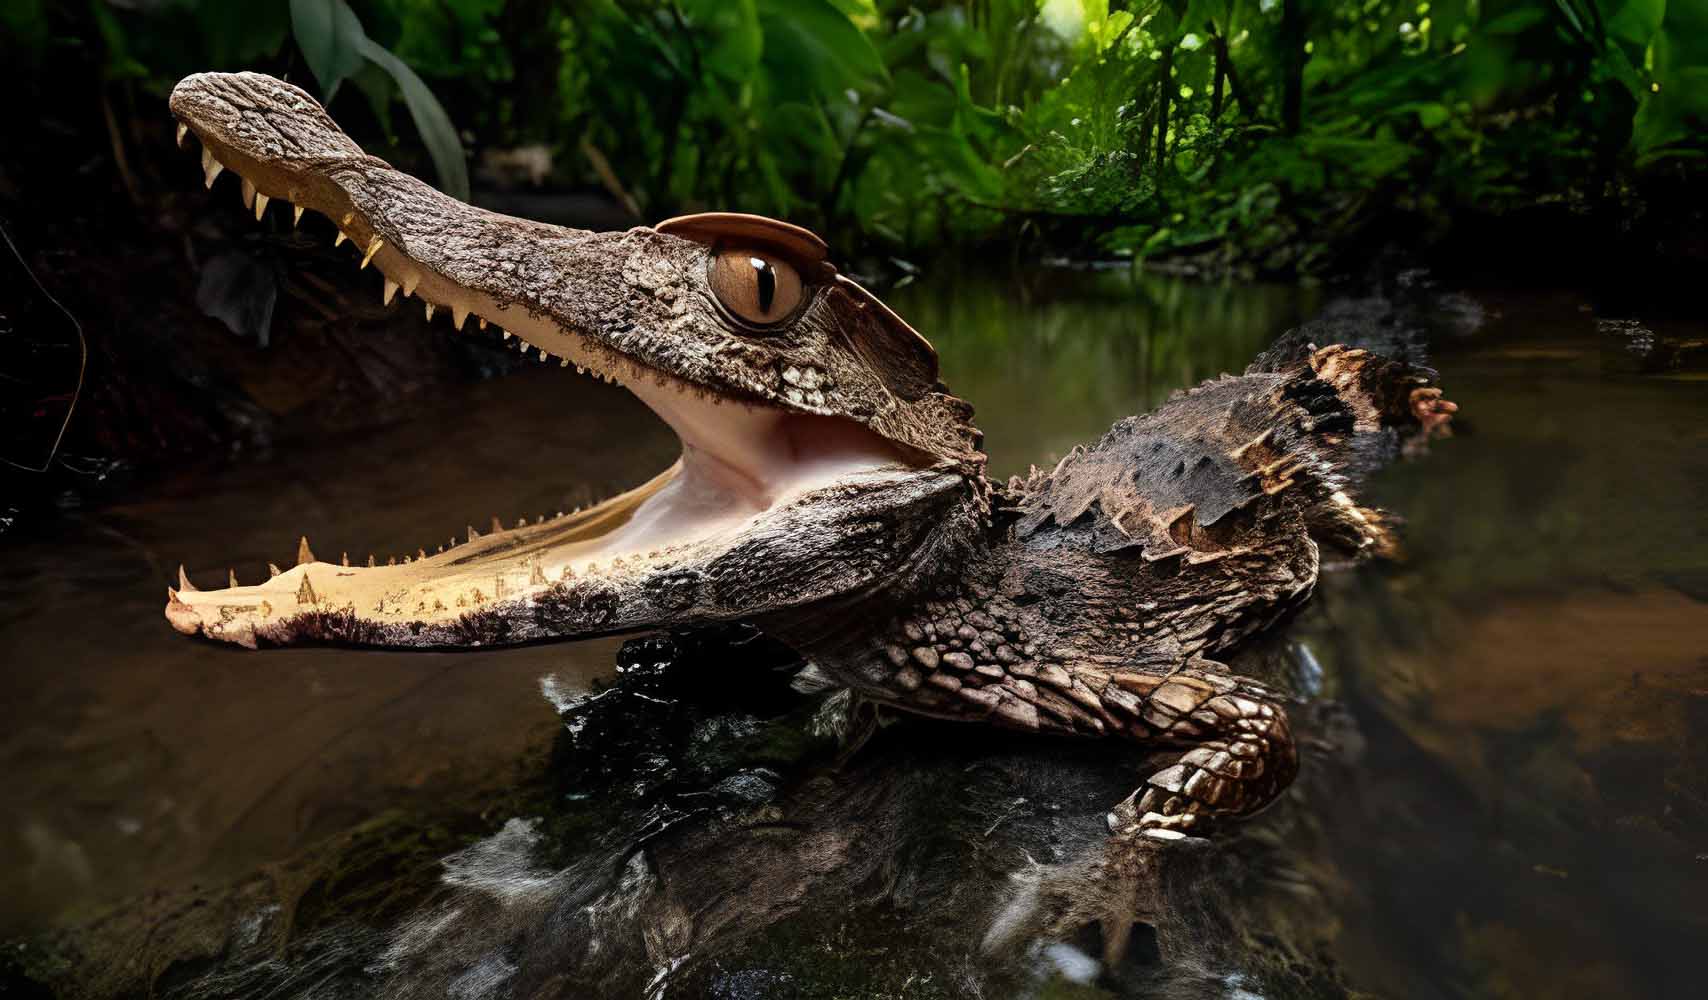 Why Are Crocodiles So Merciless? Evolutionary Adaptations